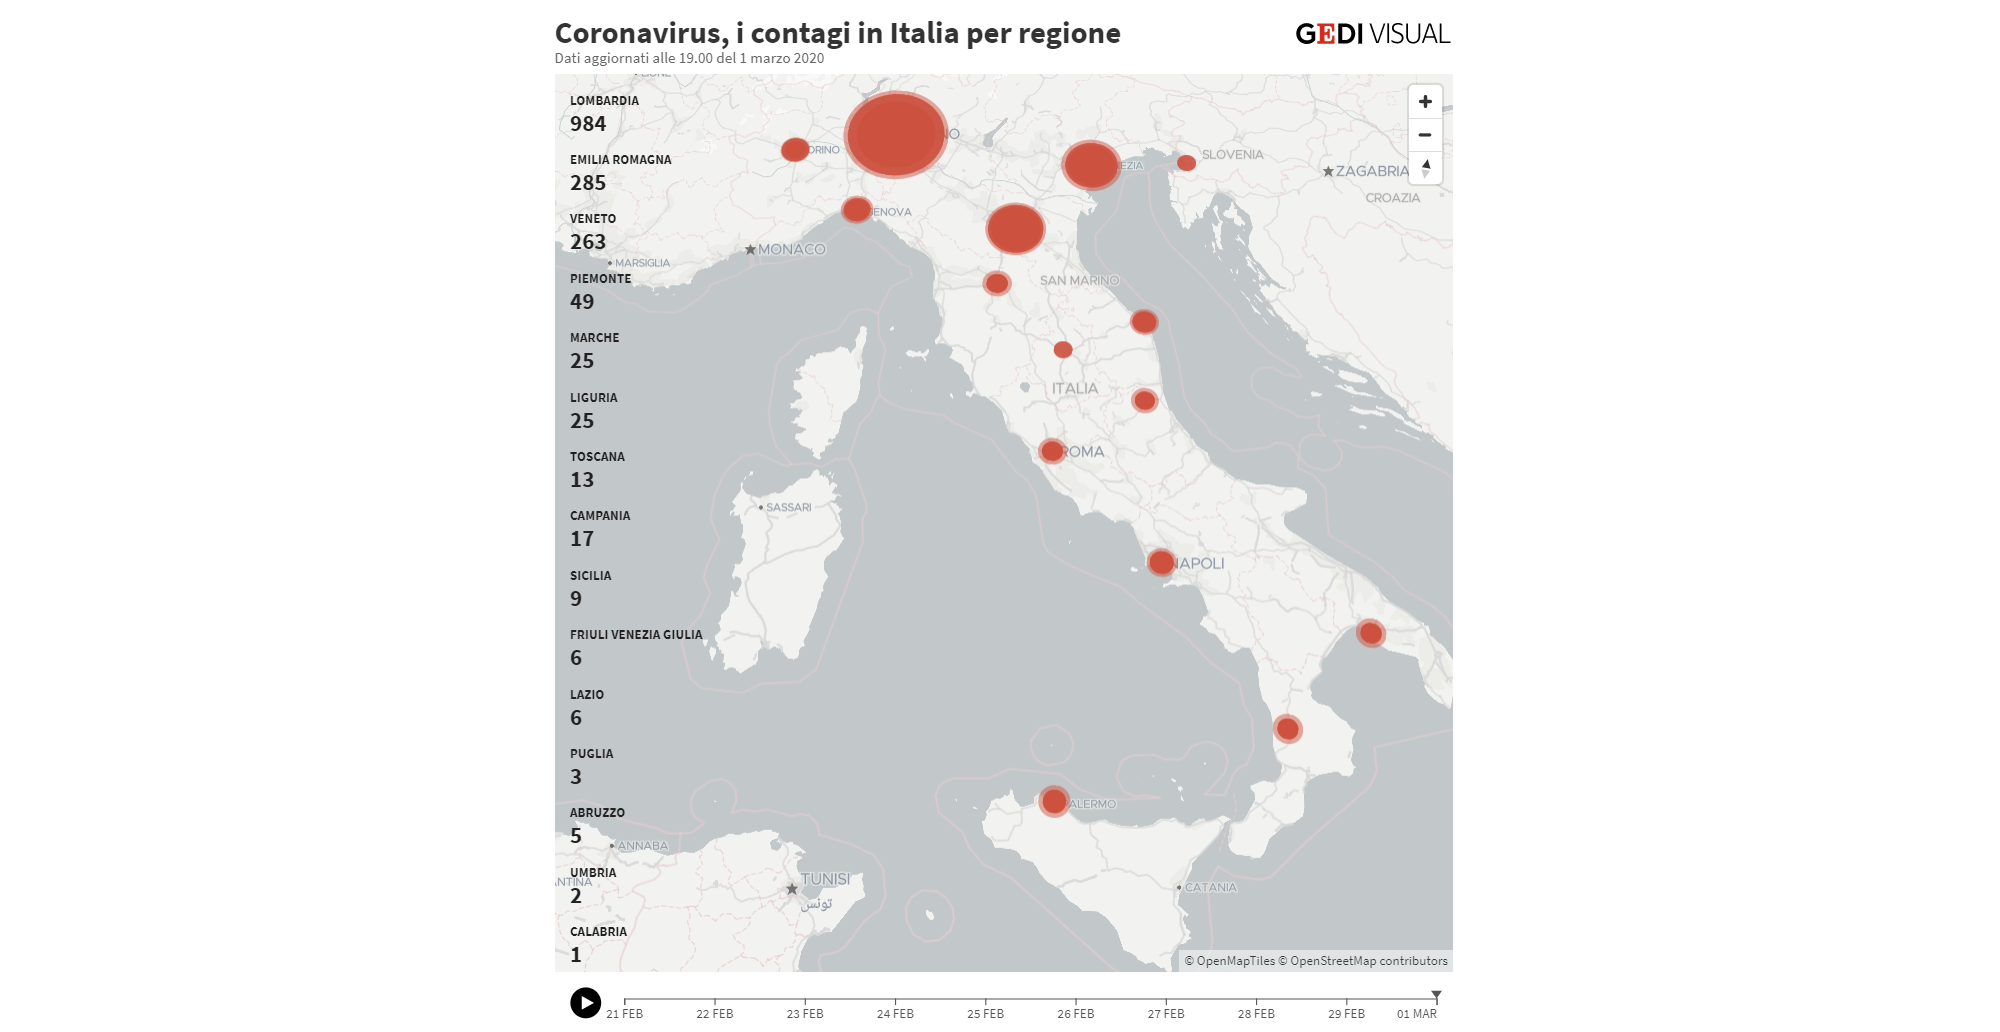 Coronavirus, mappa dell'Italia